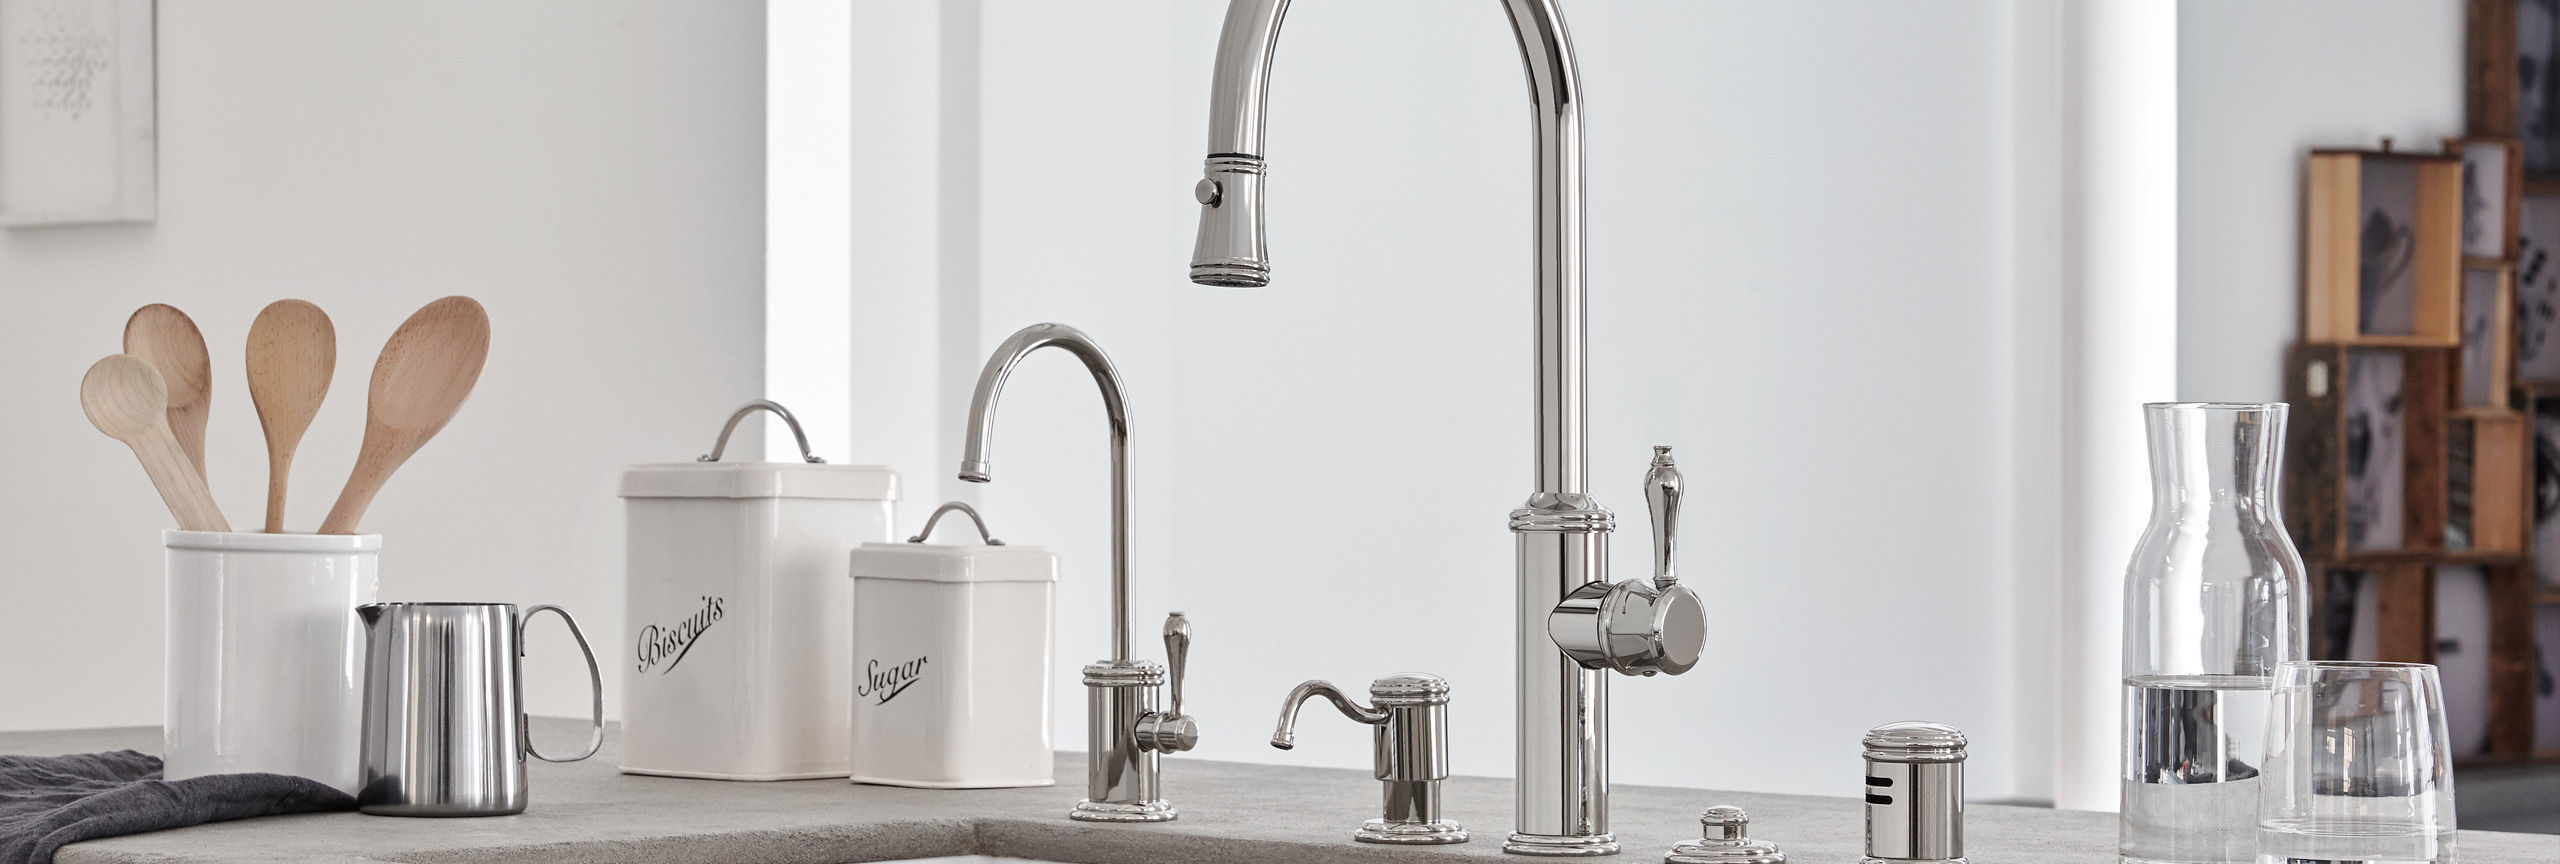 kitchen series davoli faucet water dispenser and trim accessories